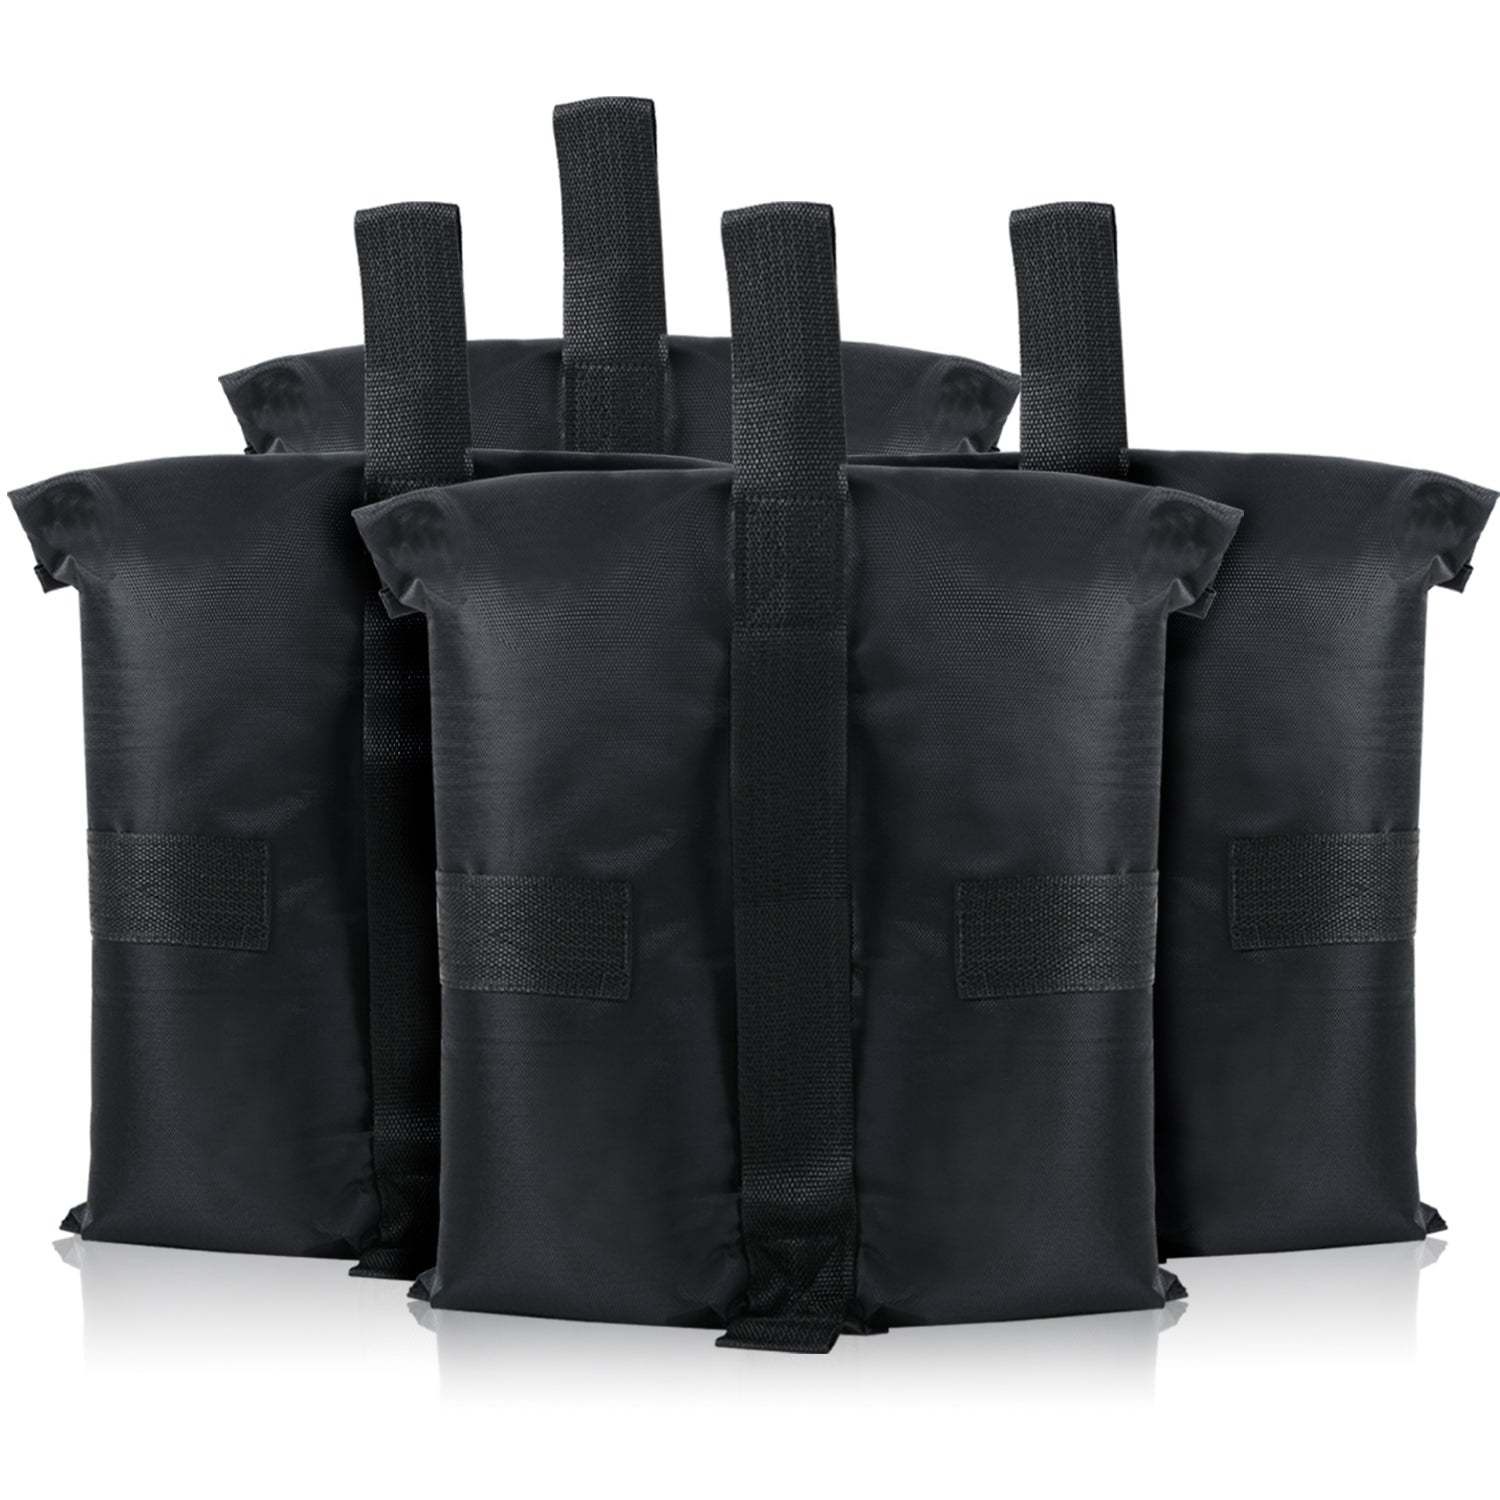 Sunnydaze Polyester Sandbag Canopy Weights - Black - Set of 4